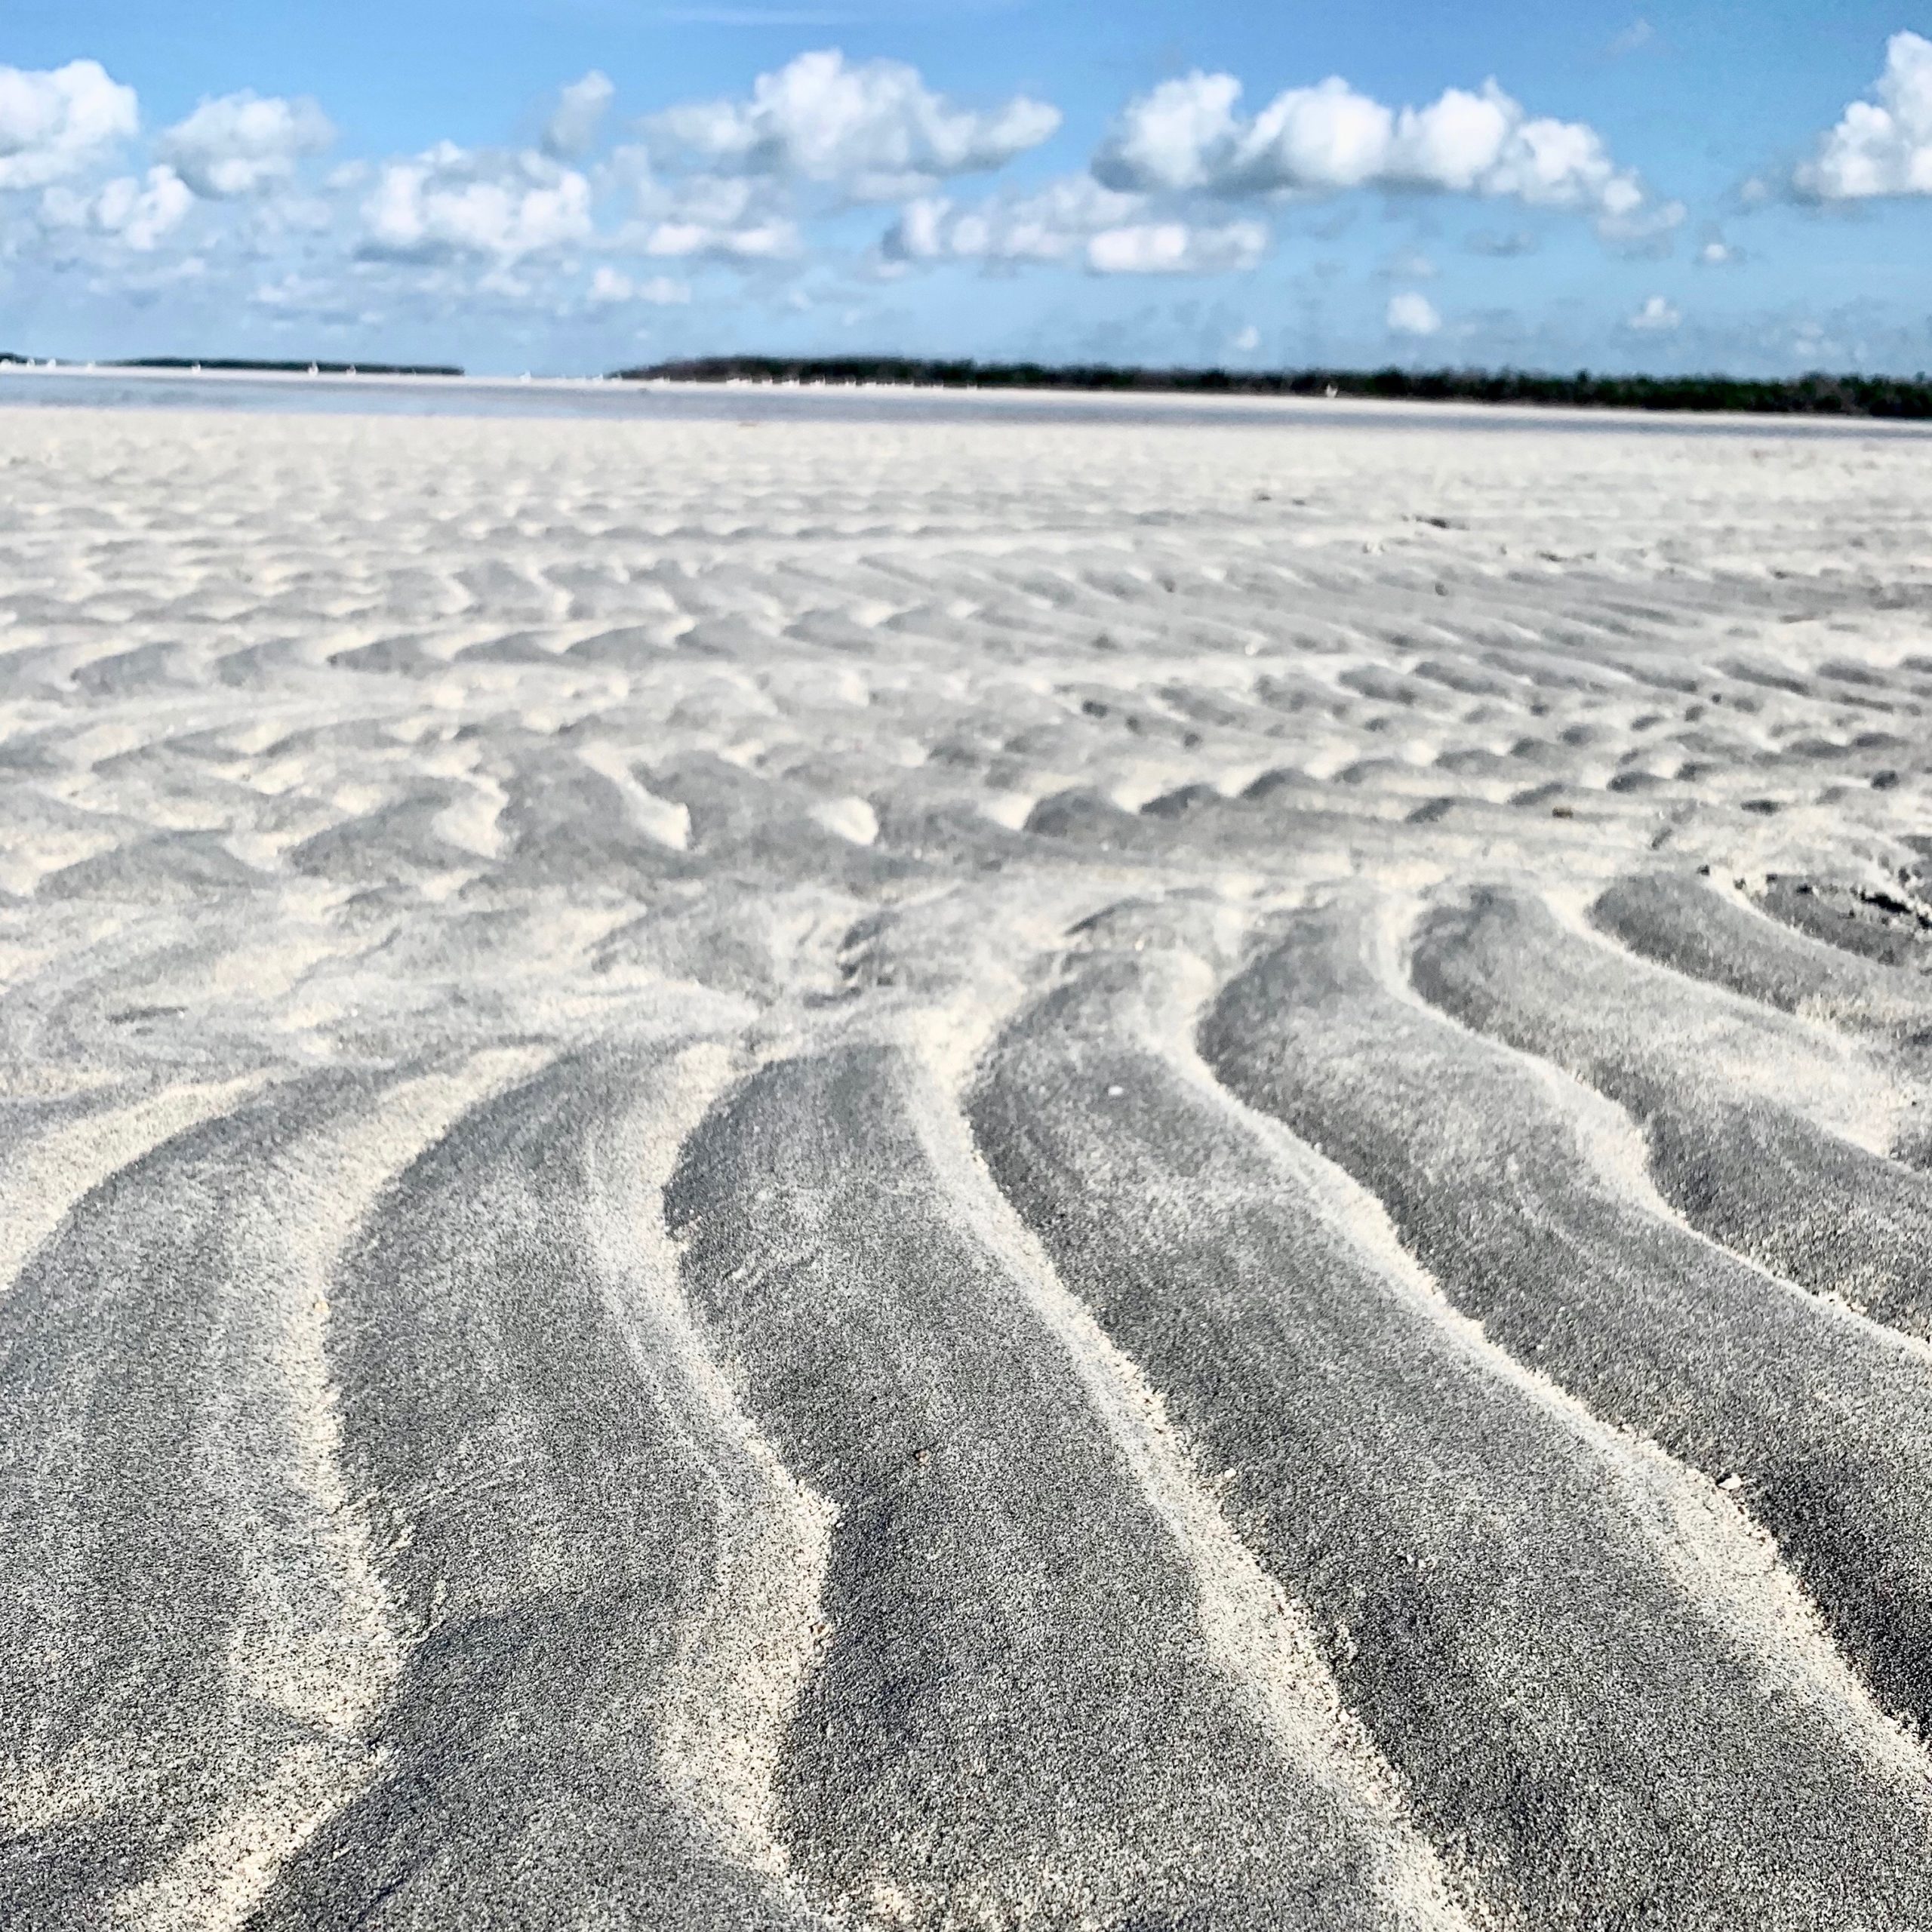 low tide at a sandbar